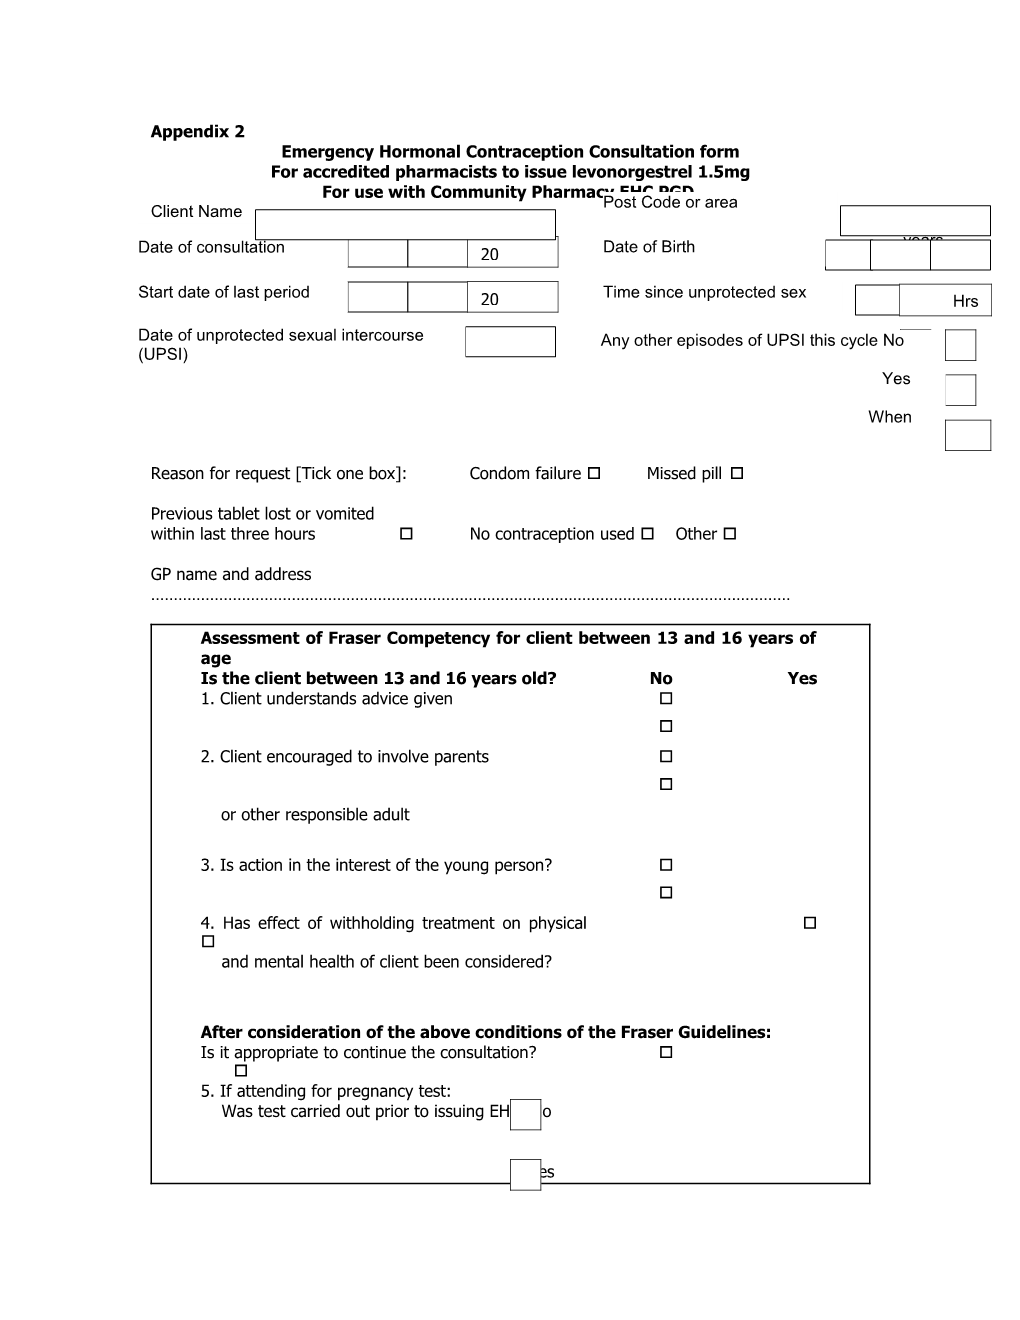 Emergency Hormonal Contraception Consultation Form